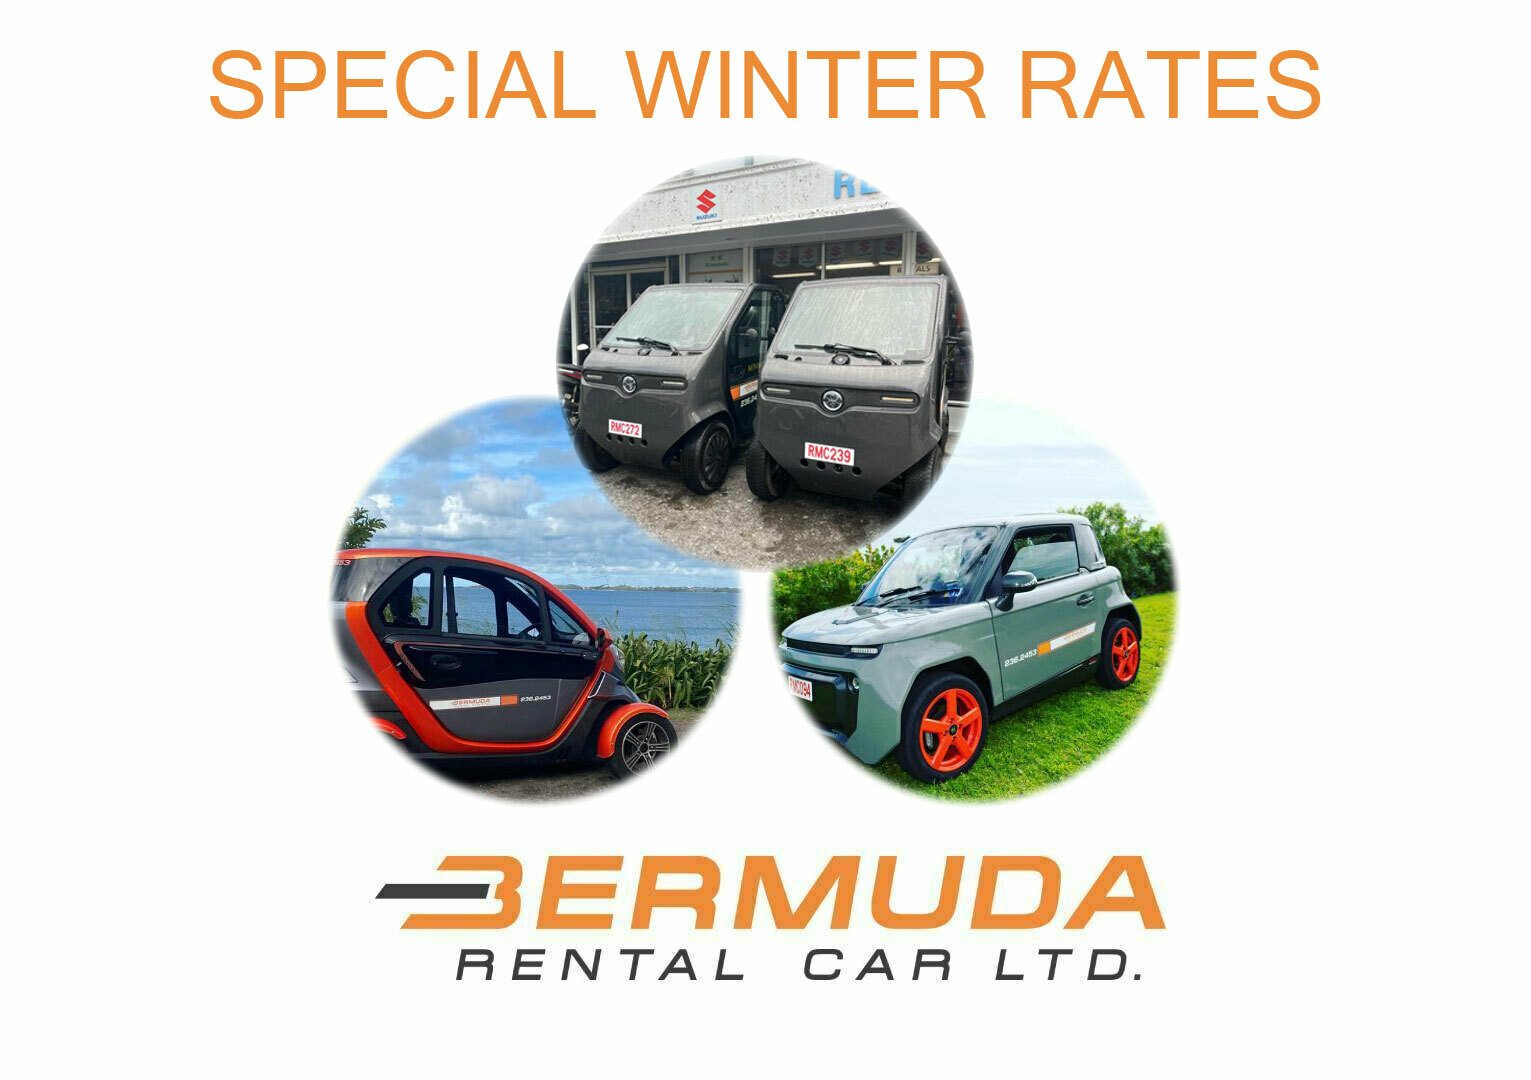 Bermuda Rental Car Winter Rates Special